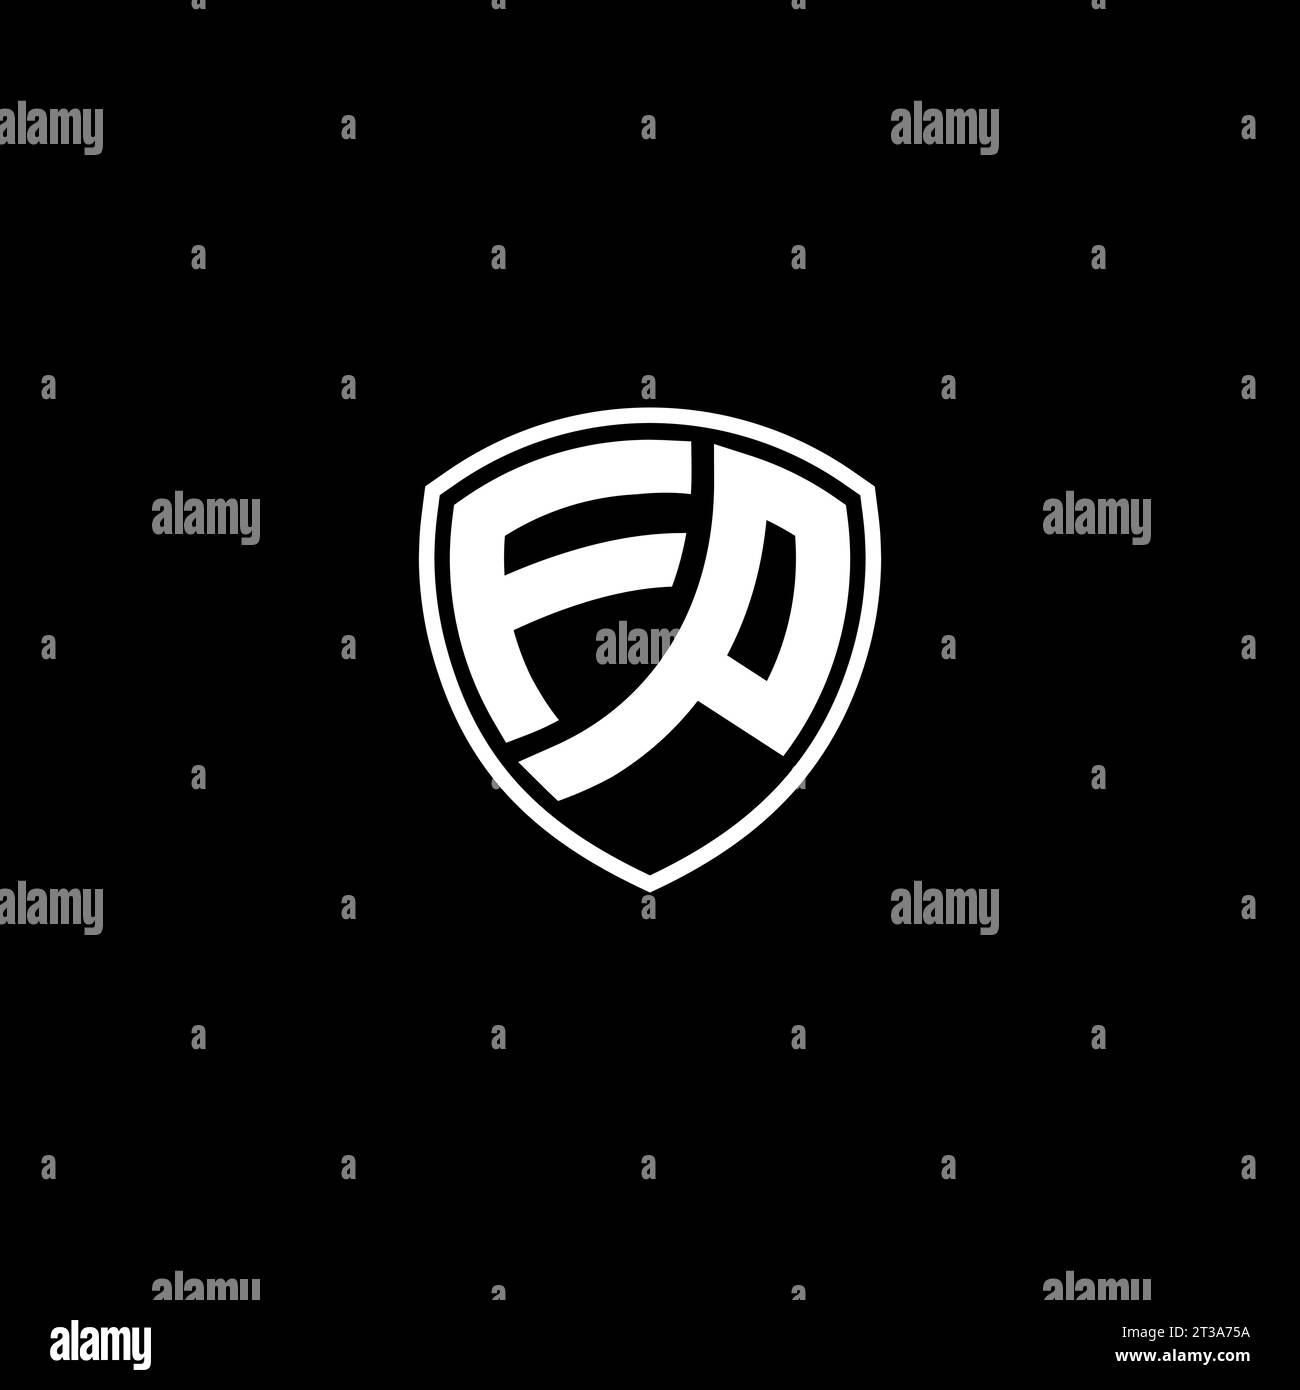 FP logo monogram emblem style with shield shape design template ideas Stock Vector